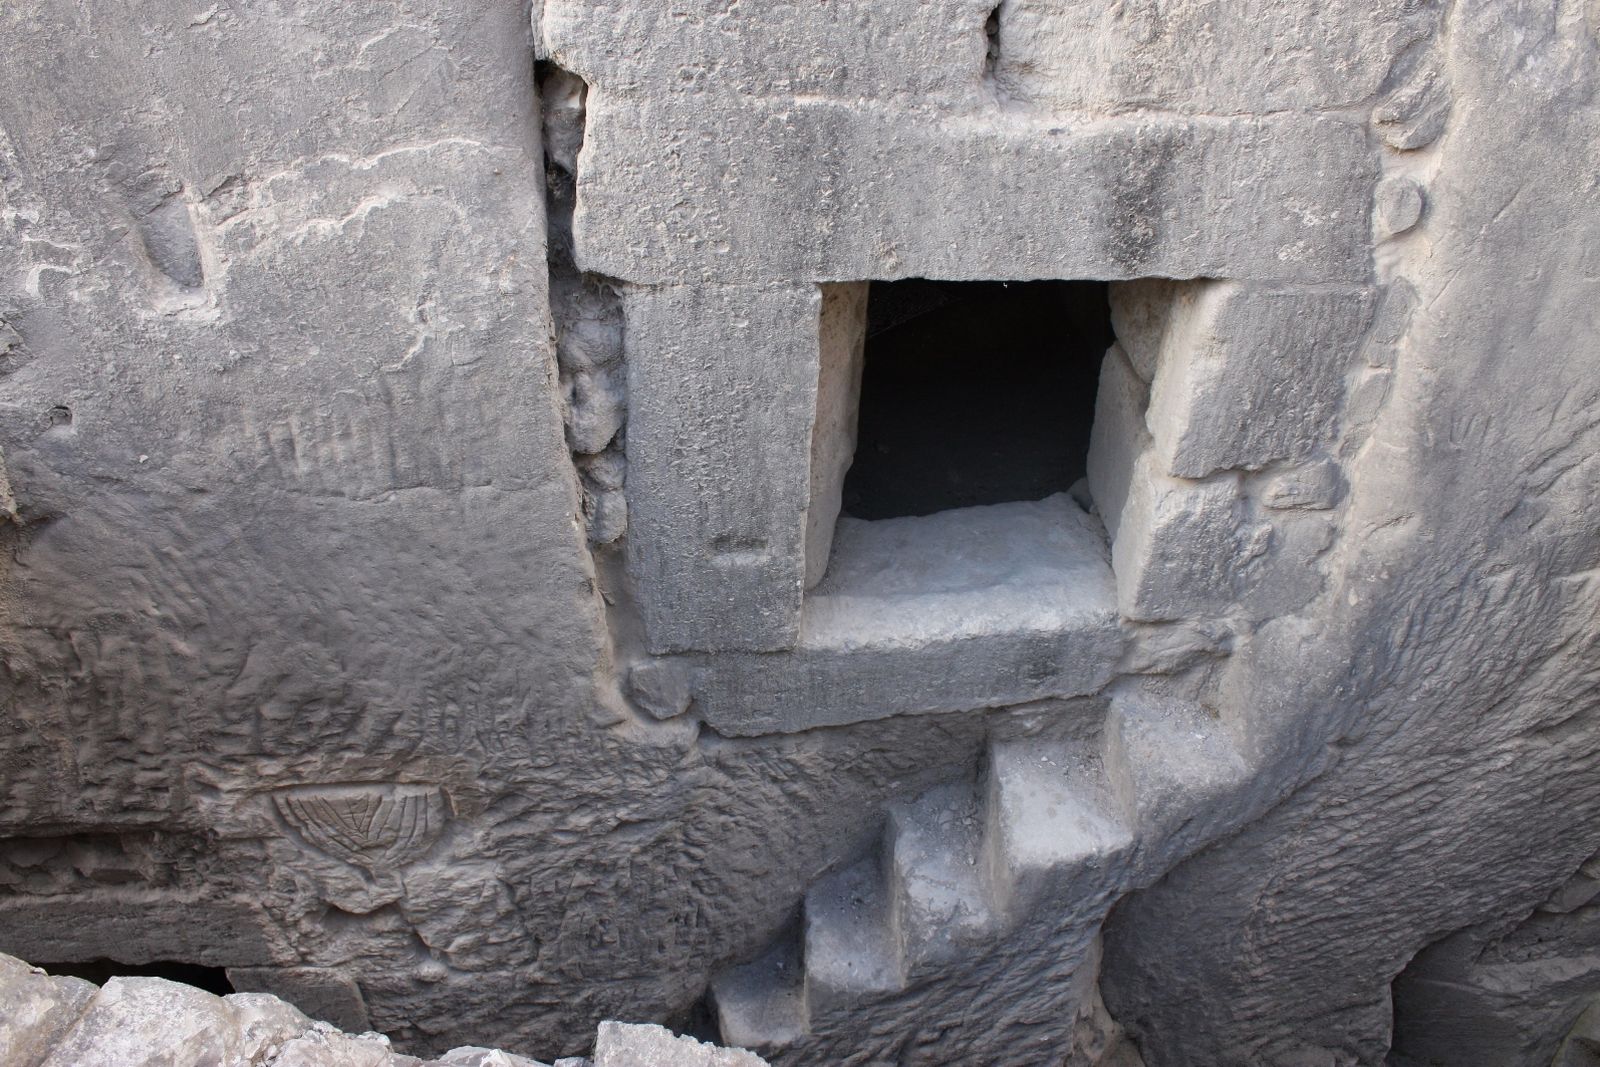 Inside Catacomb 1. Photo by Tsvika Tsuk/Israel Nature and Parks Authority